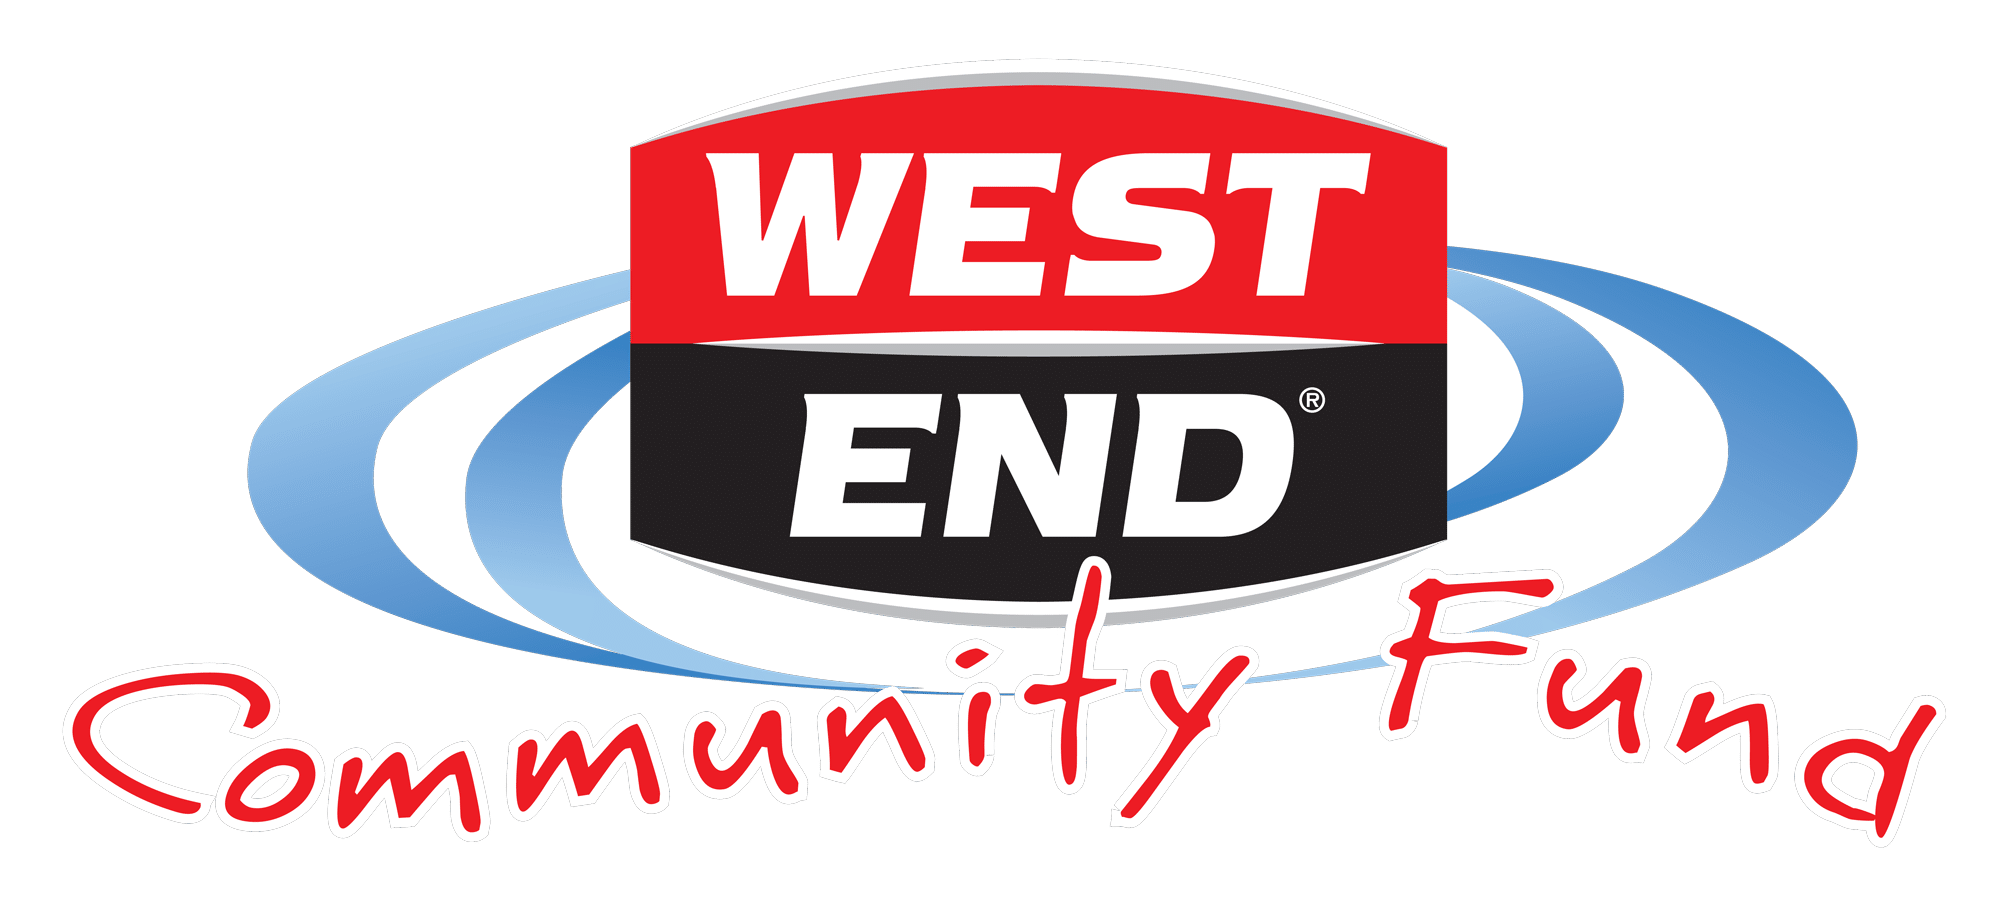 West End Community Fund